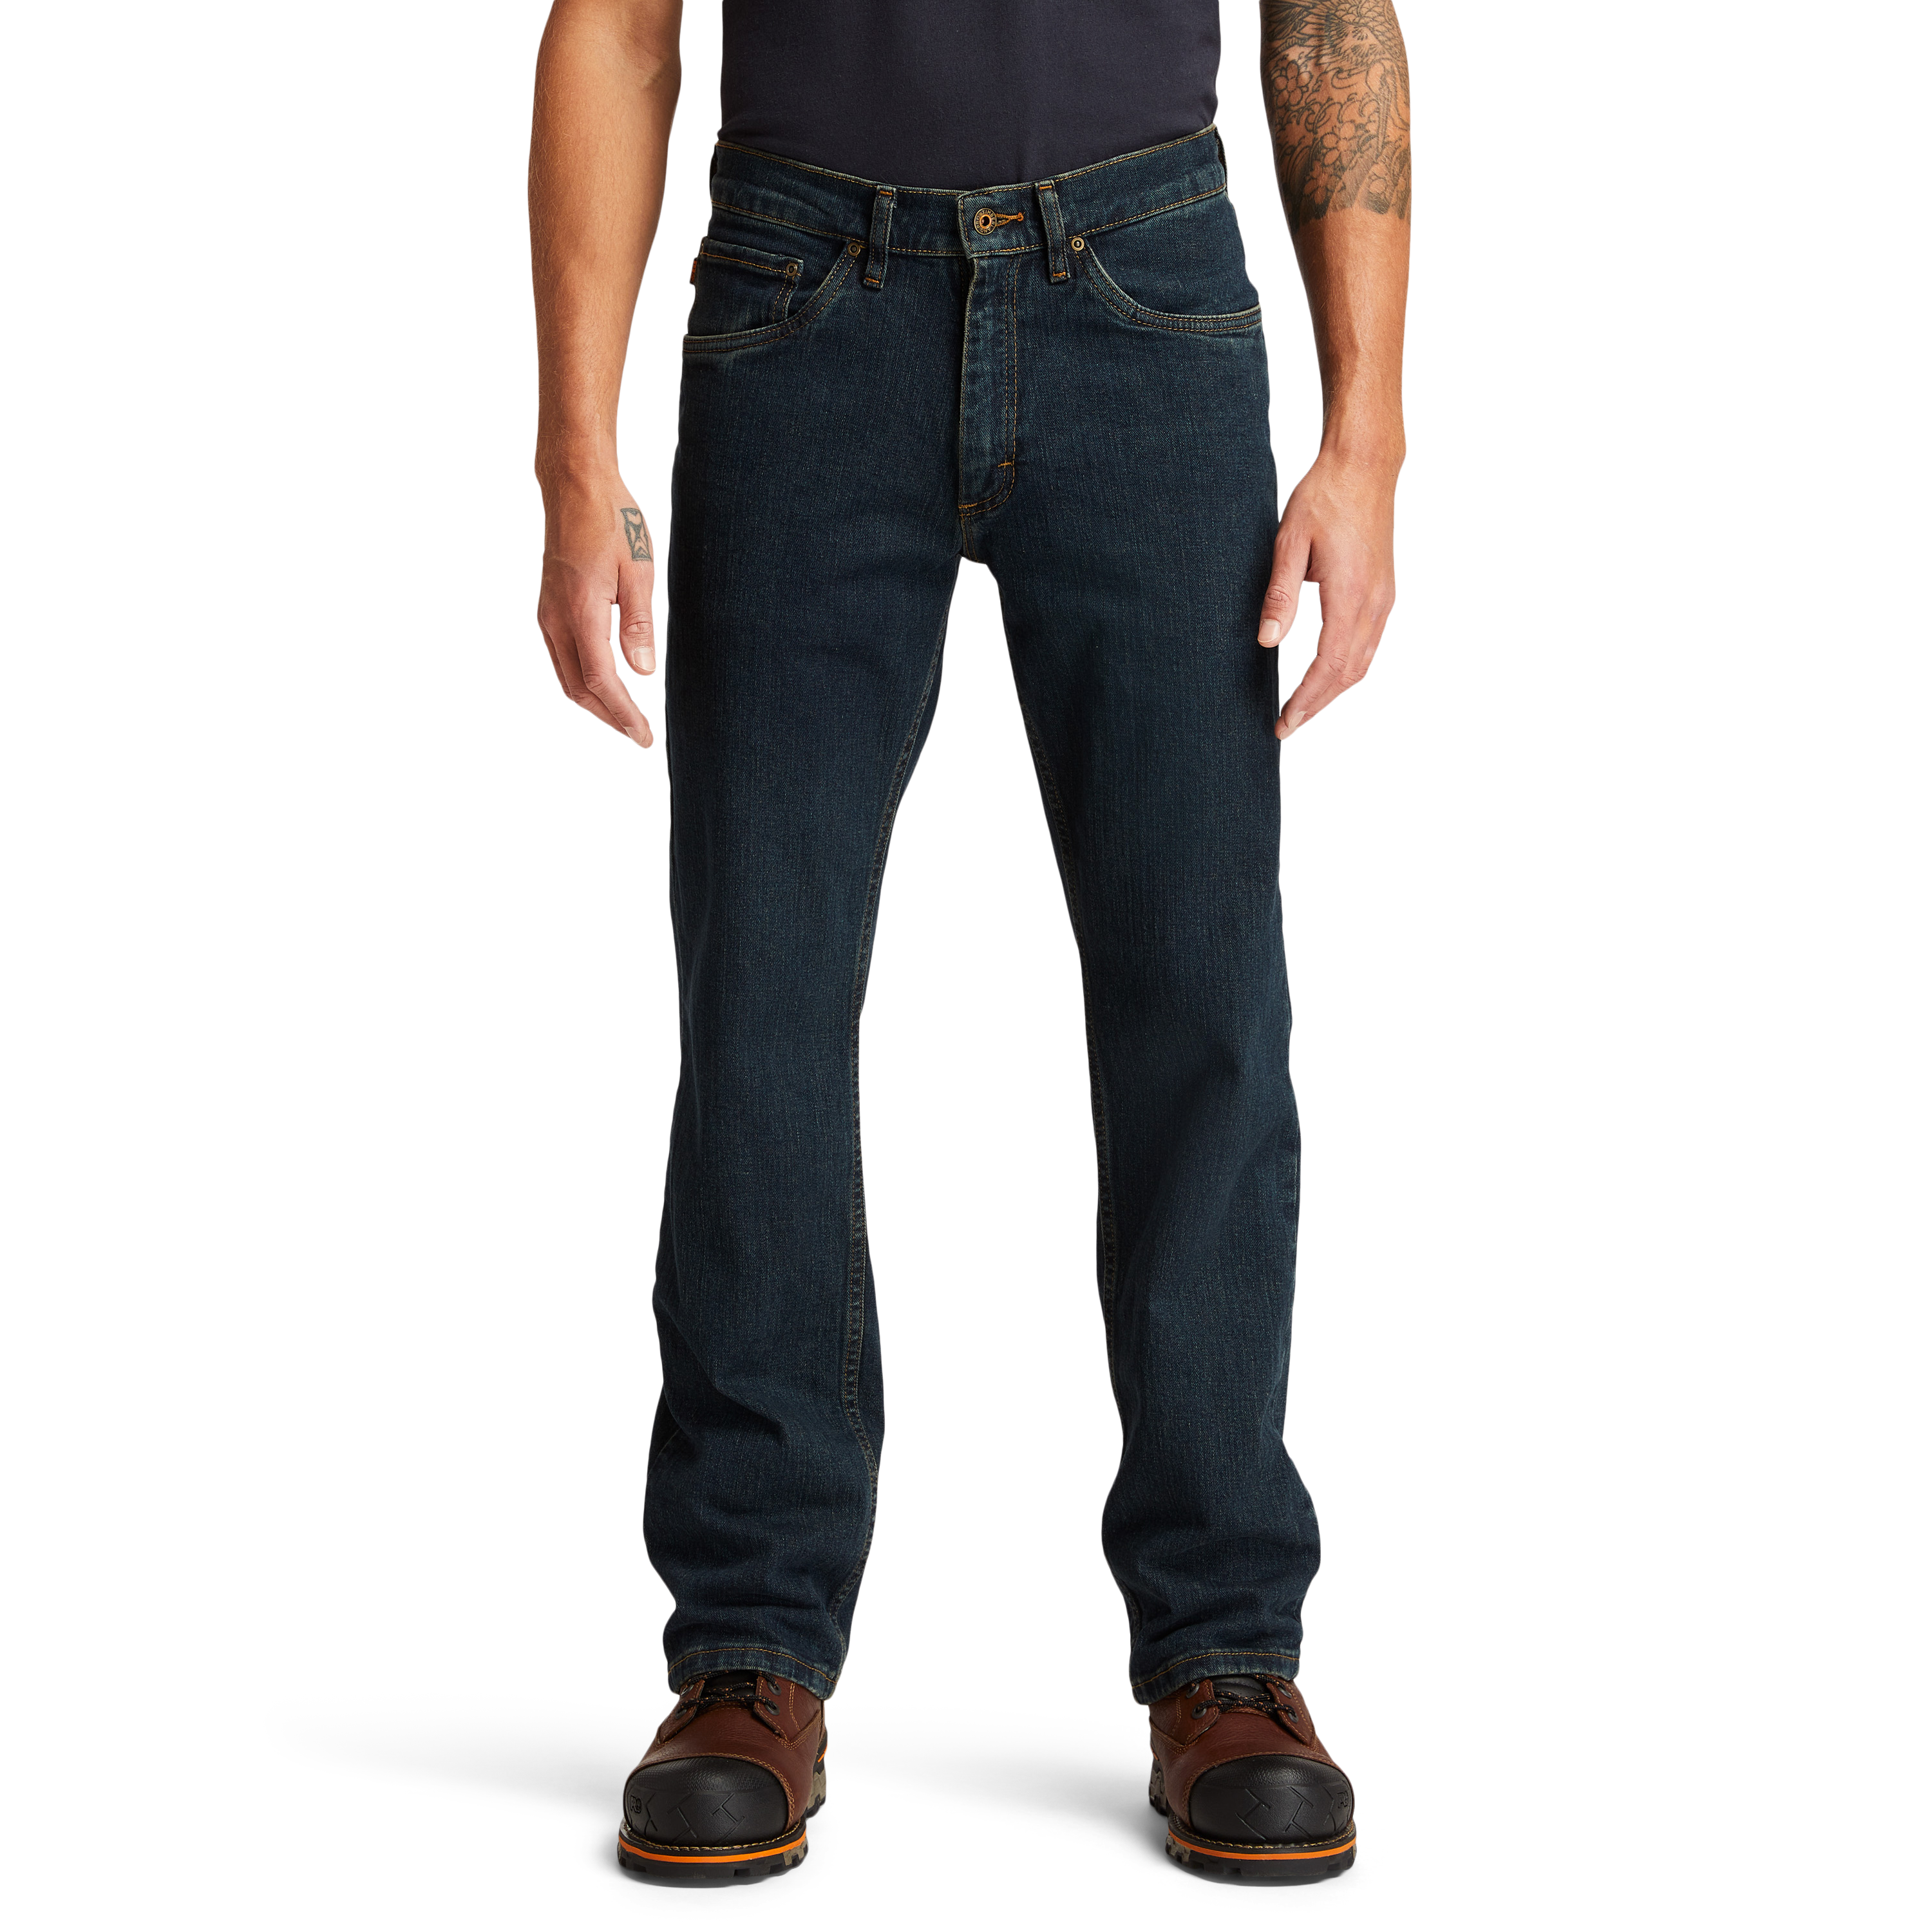 Timberland Grit-N-Grind Jeans - Mens